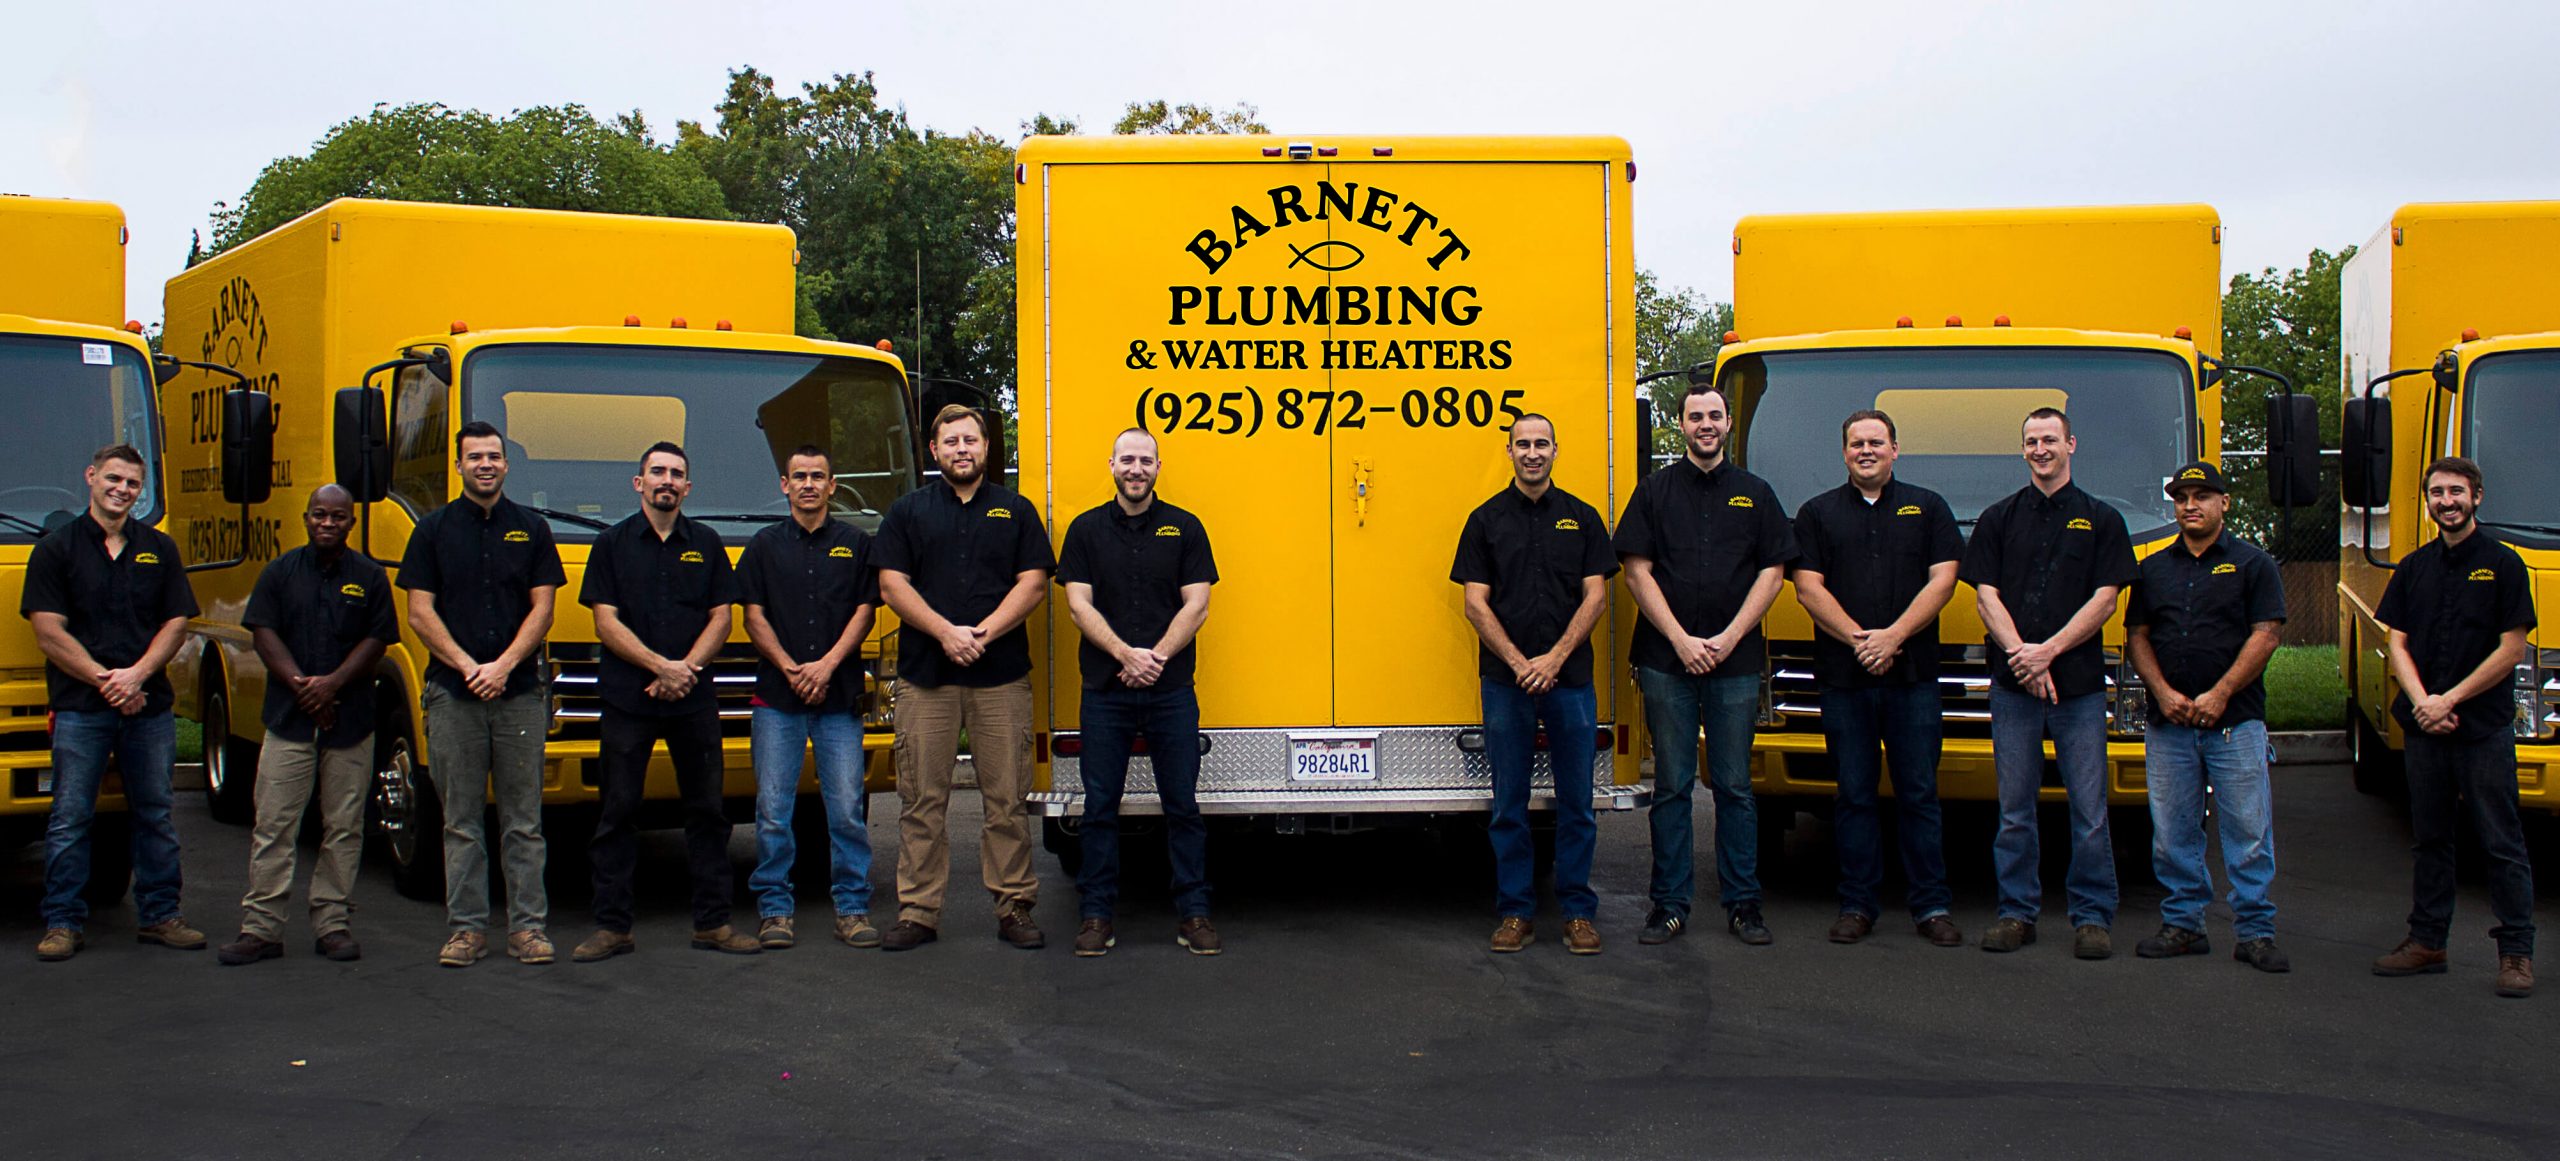 The team at Barnett Plumbing standing in front of yellow trucks